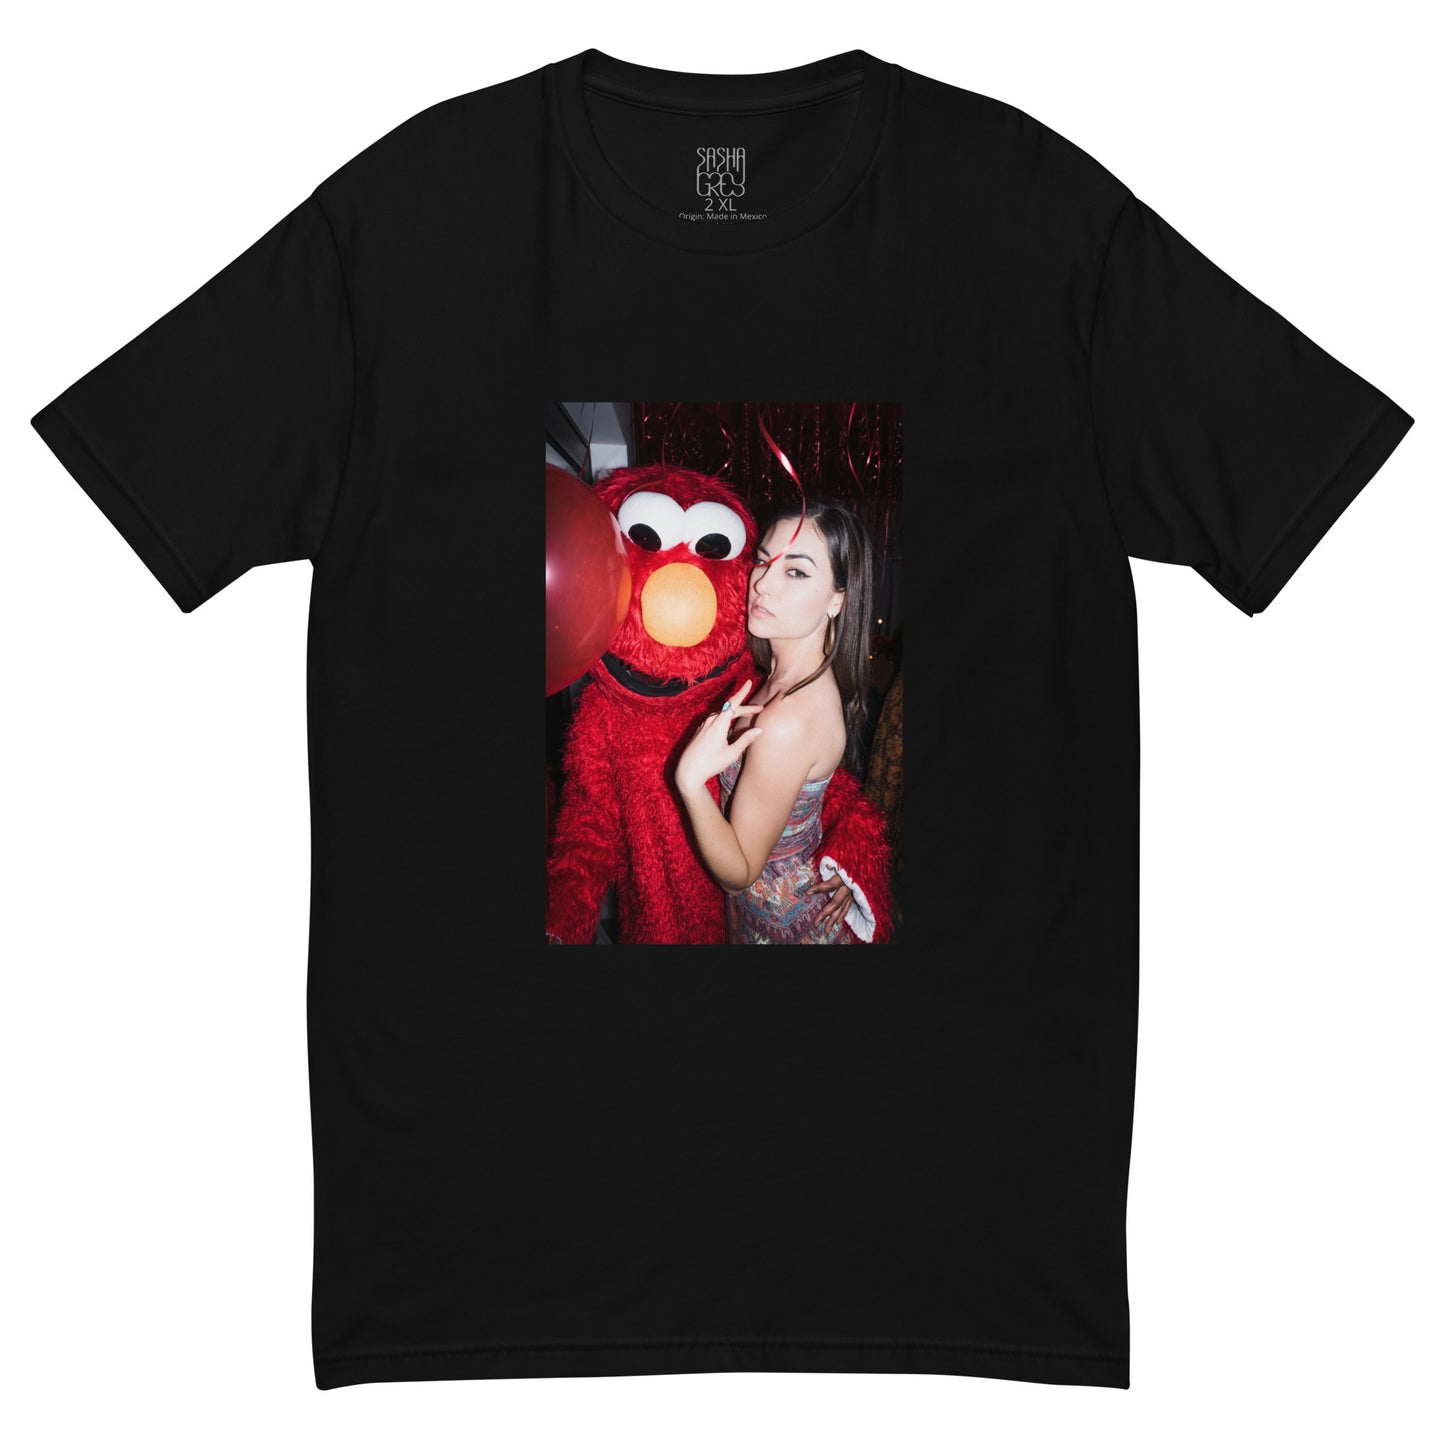 Sasha Grey Graphic T-Shirt